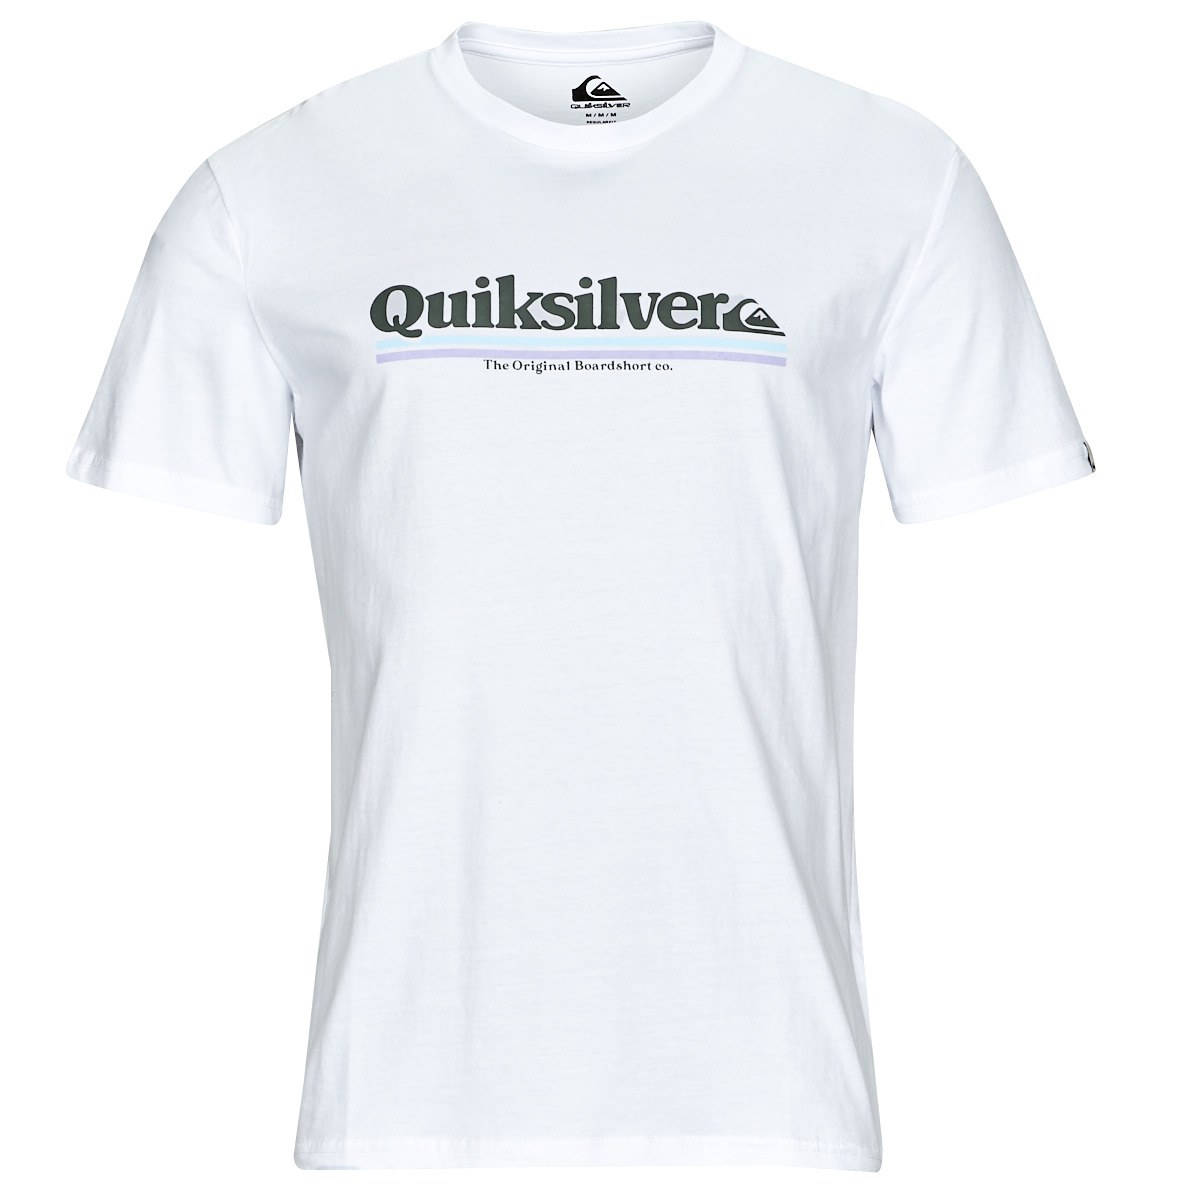 textil Herr T-shirts Quiksilver BETWEEN THE LINES SS Vit / Blå